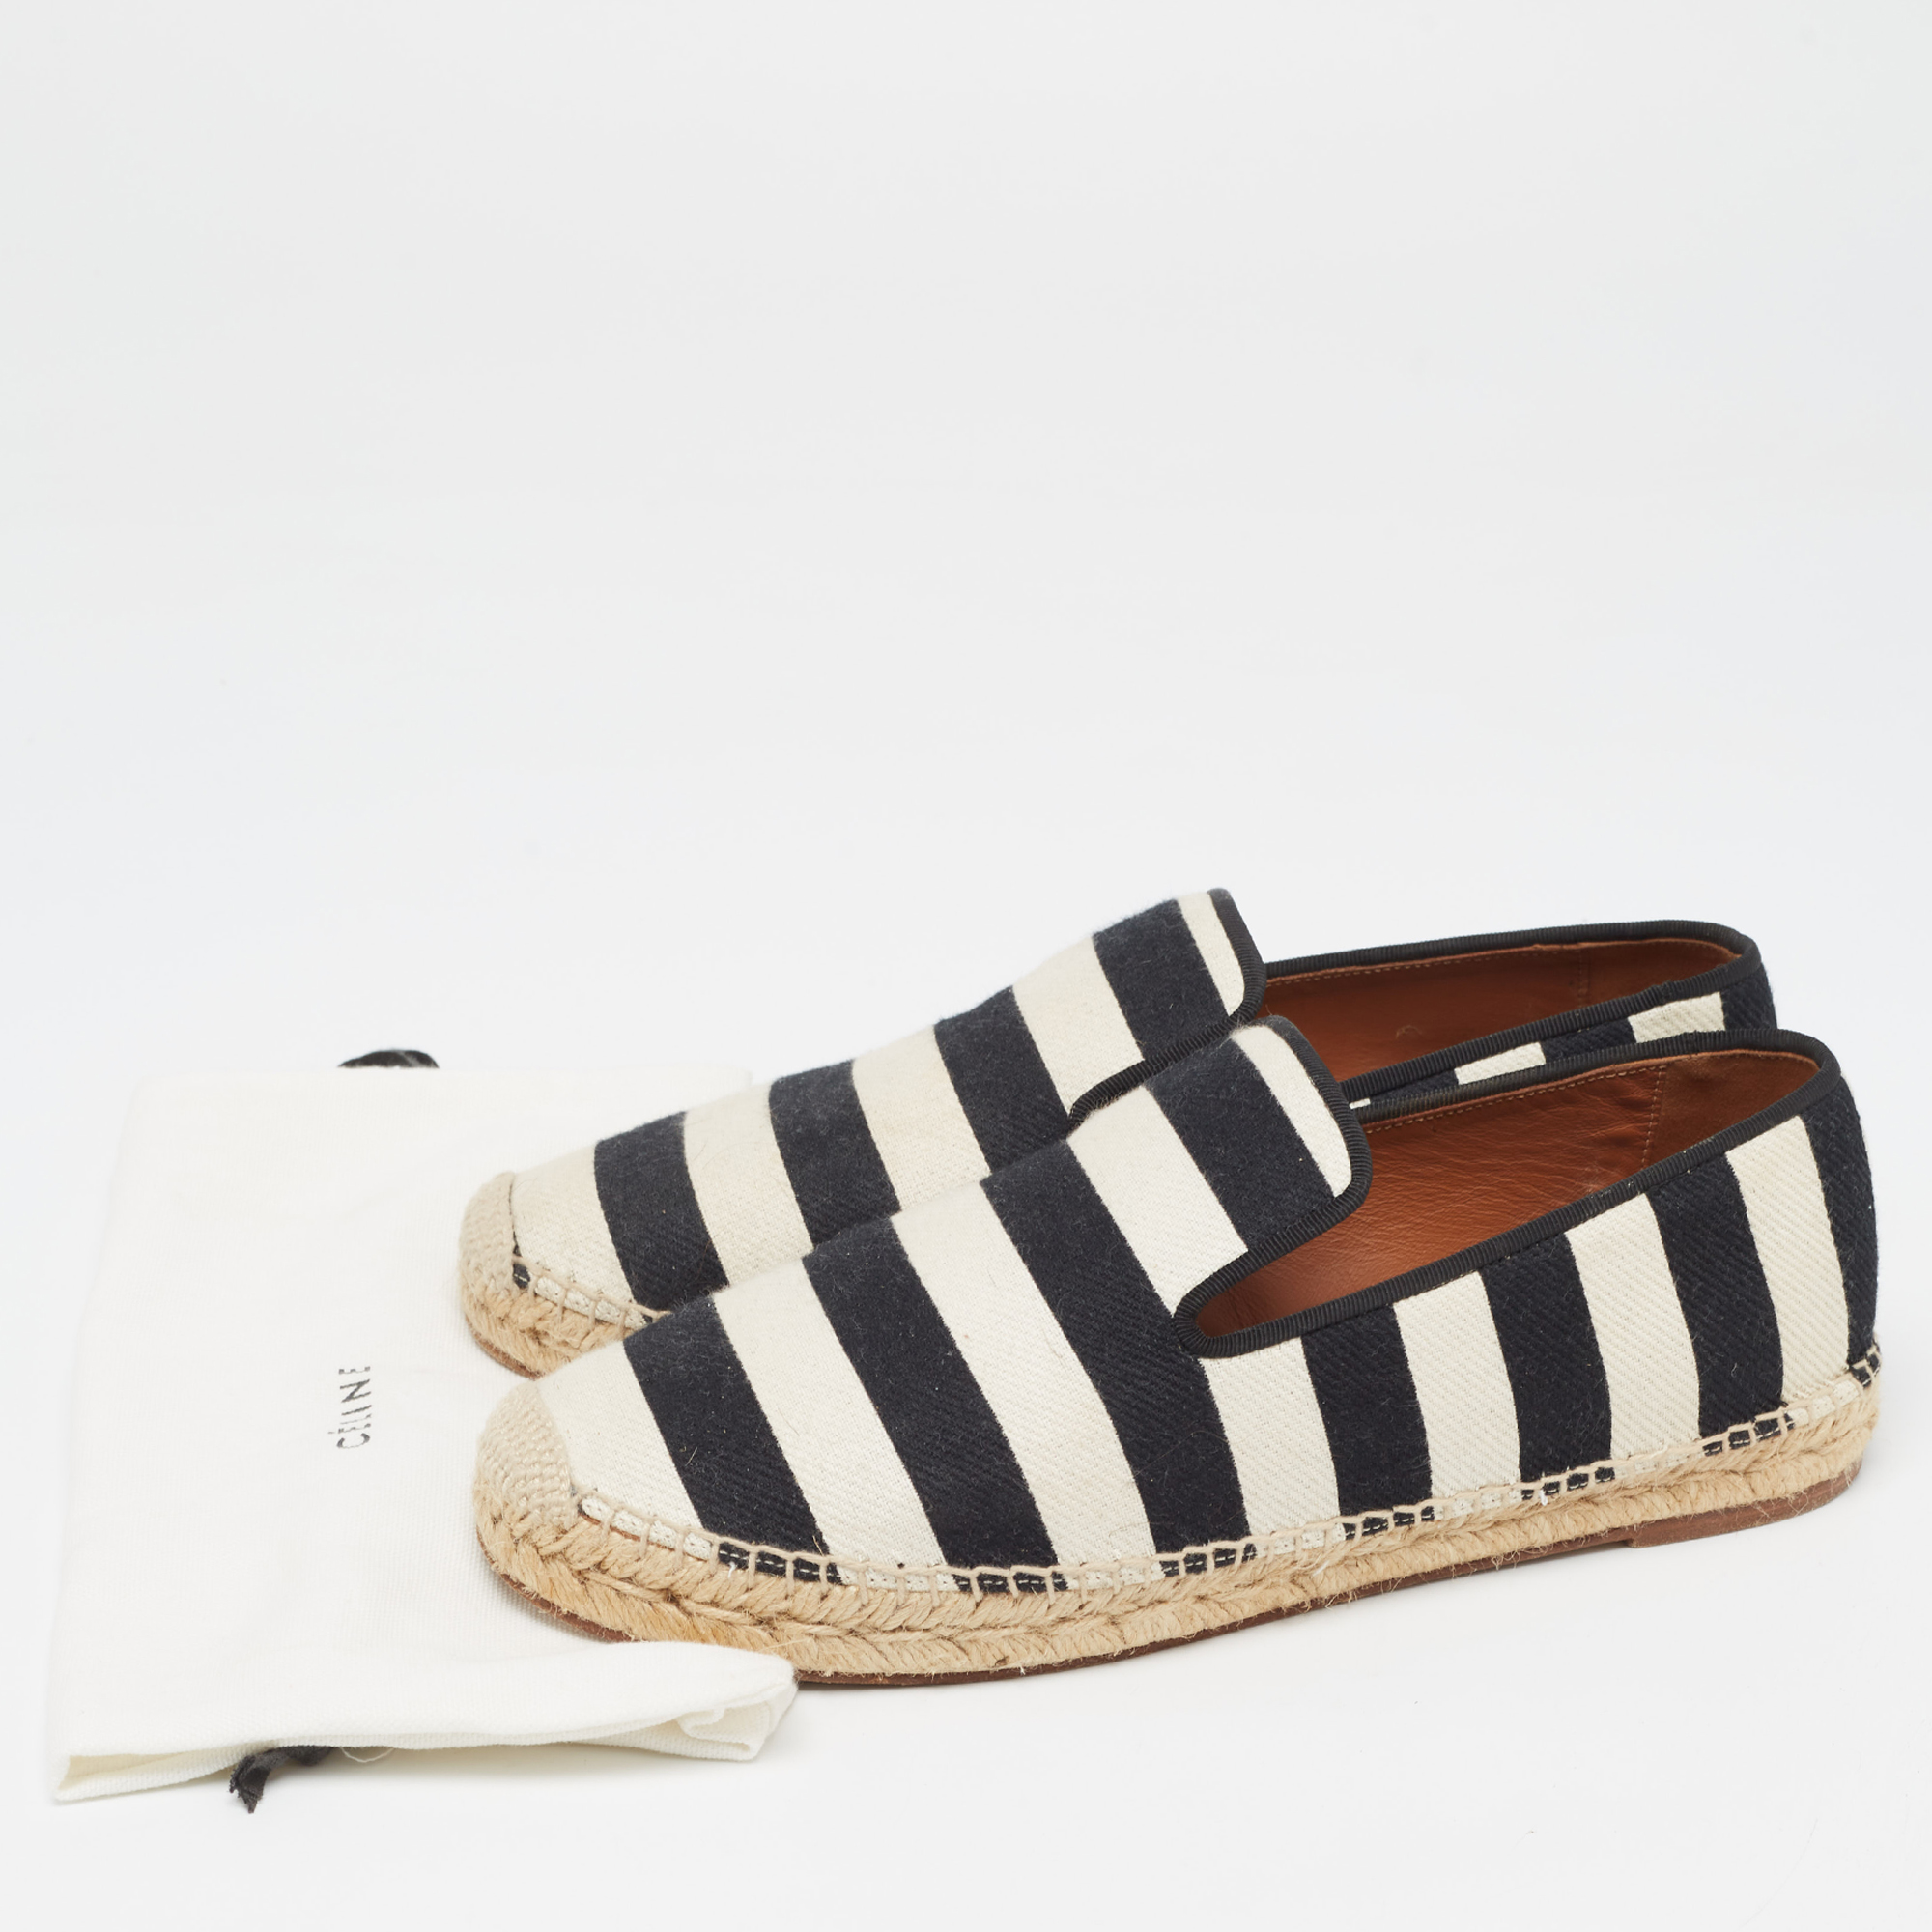 Celine White/Black Striped Canvas Espadrille Flats Size 40